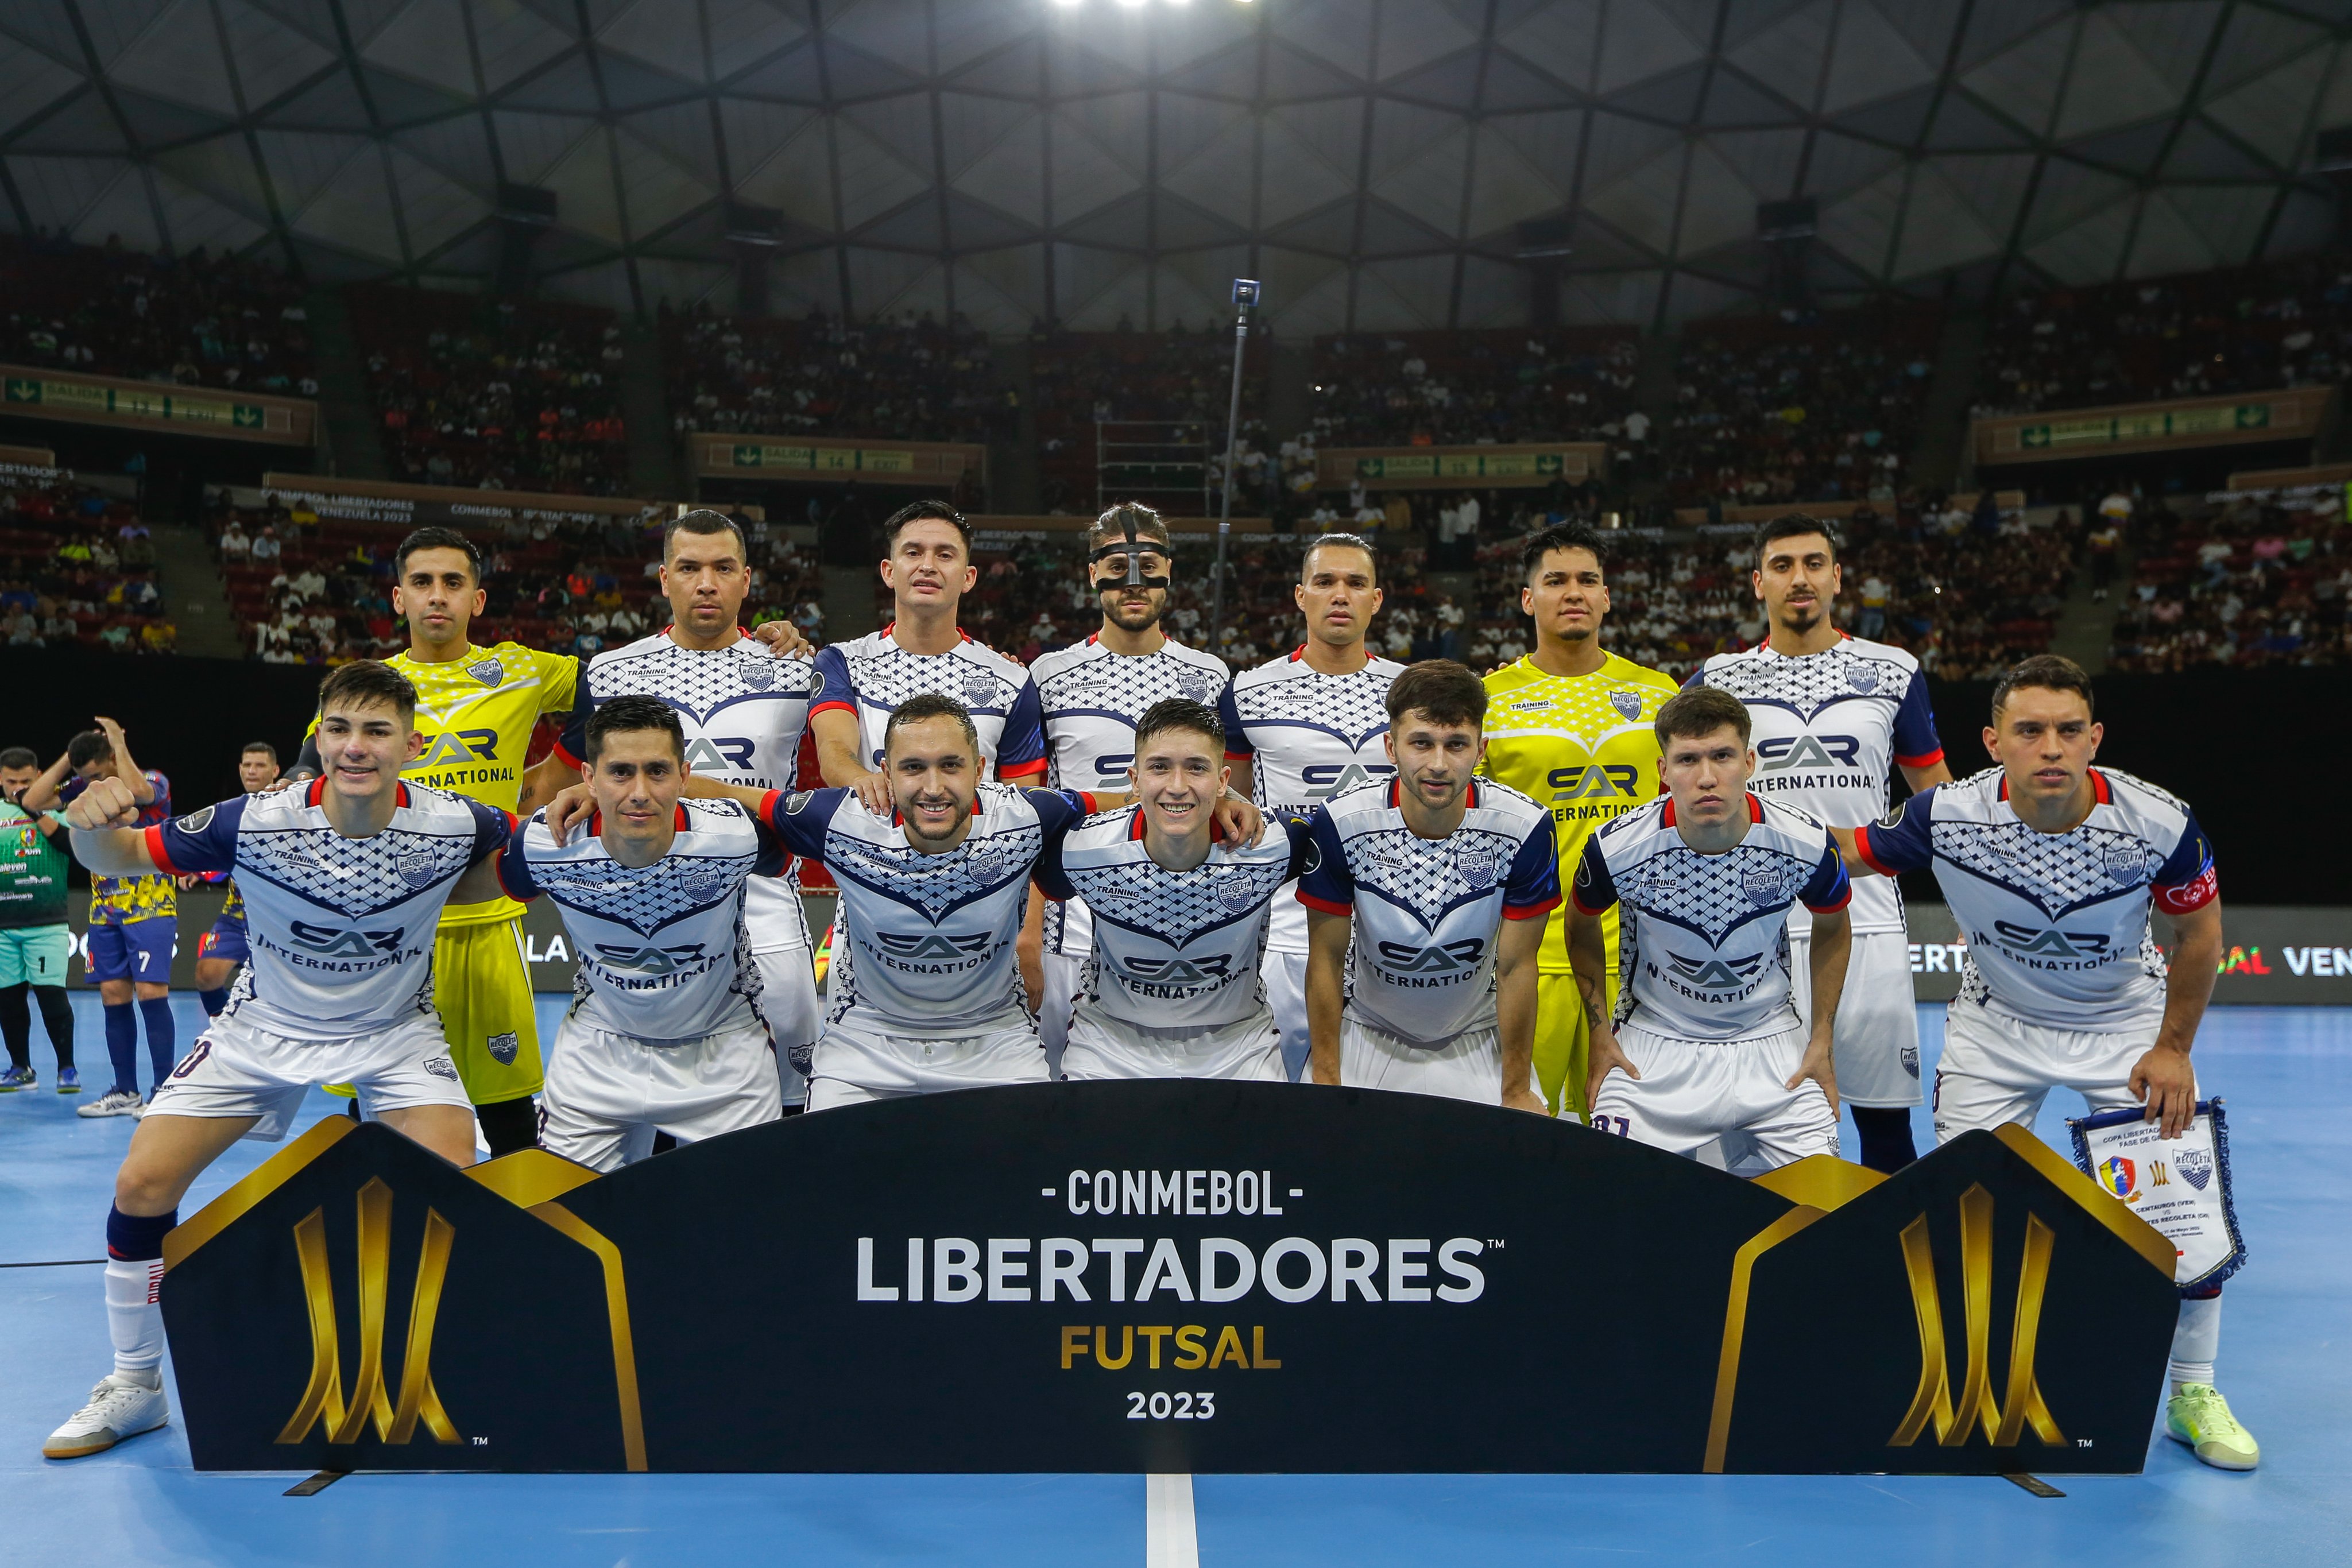 Libertadores Futsal